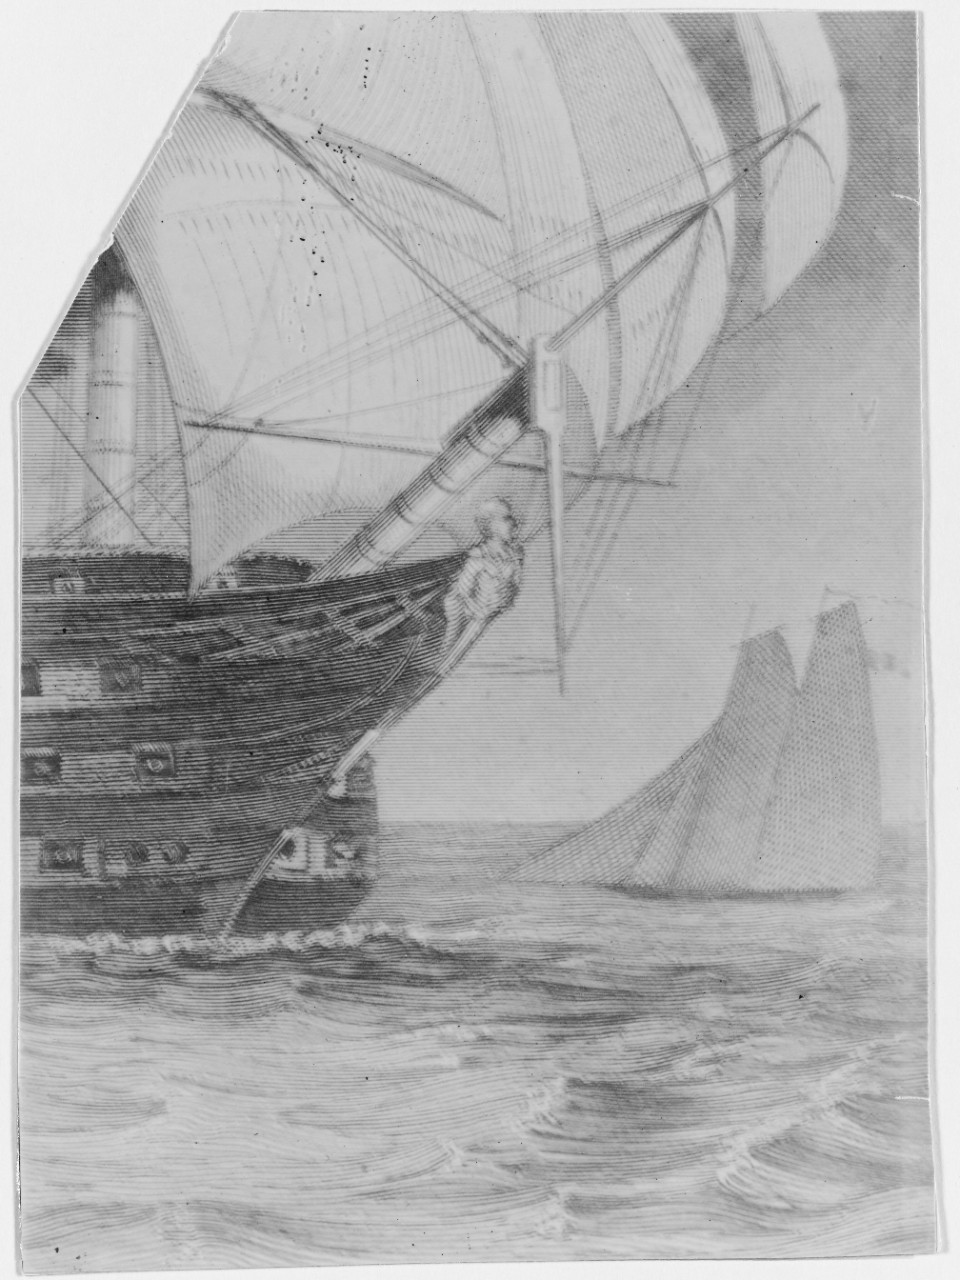 Figurehead of the British ship of the line PRINCE ALBERT (circa 1840s?)